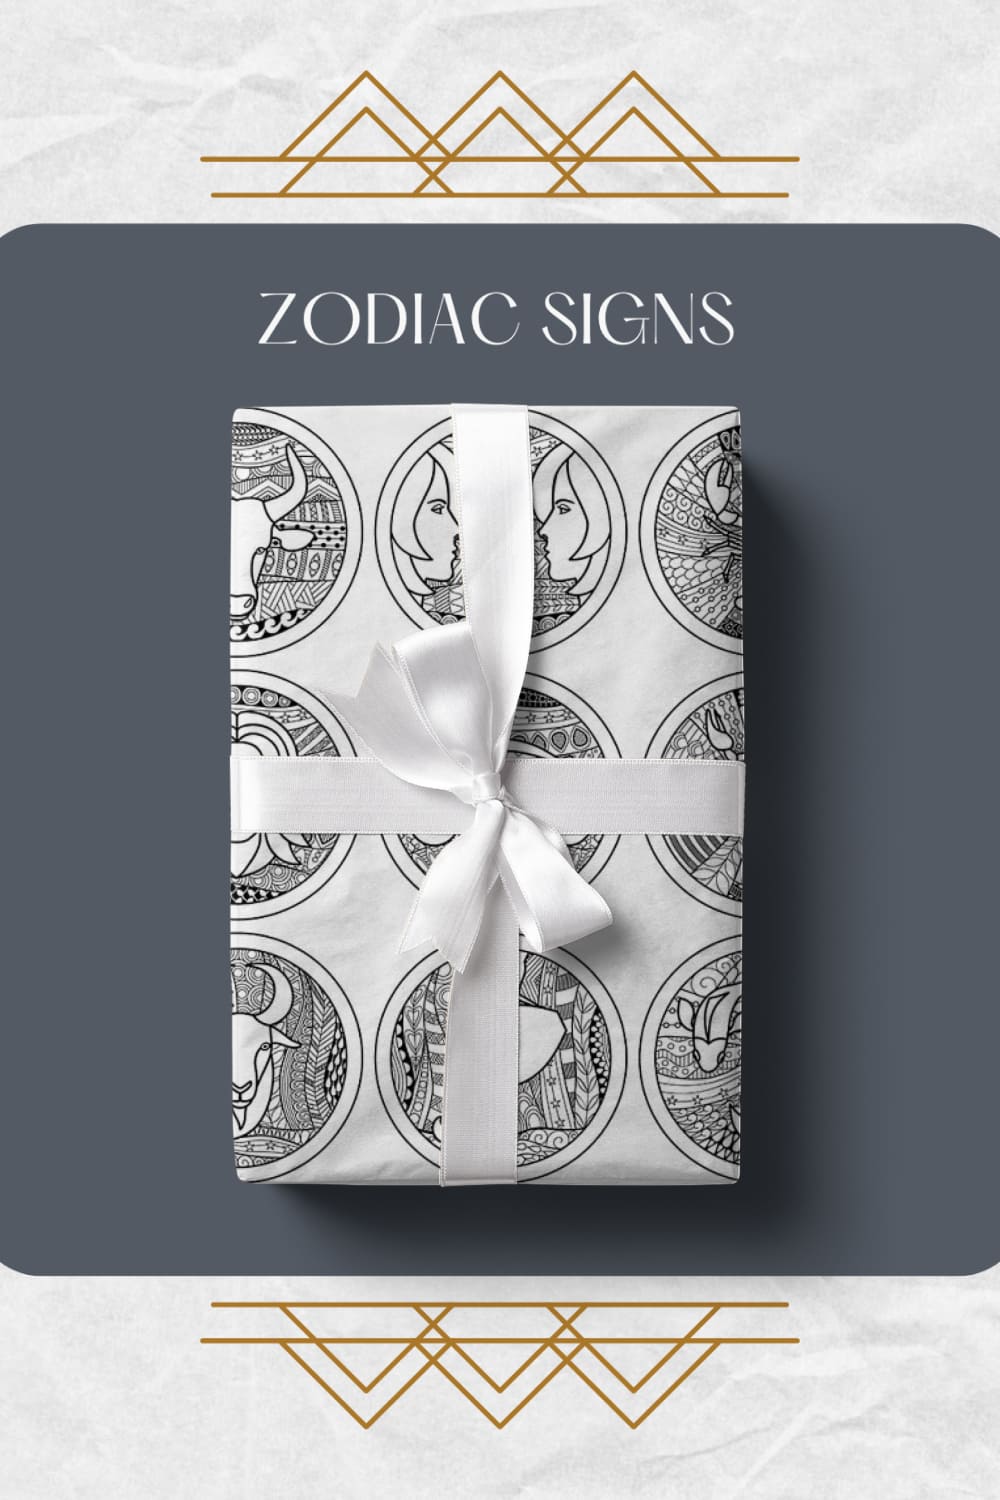 12 Zodiac Signs - pinterest image preview.